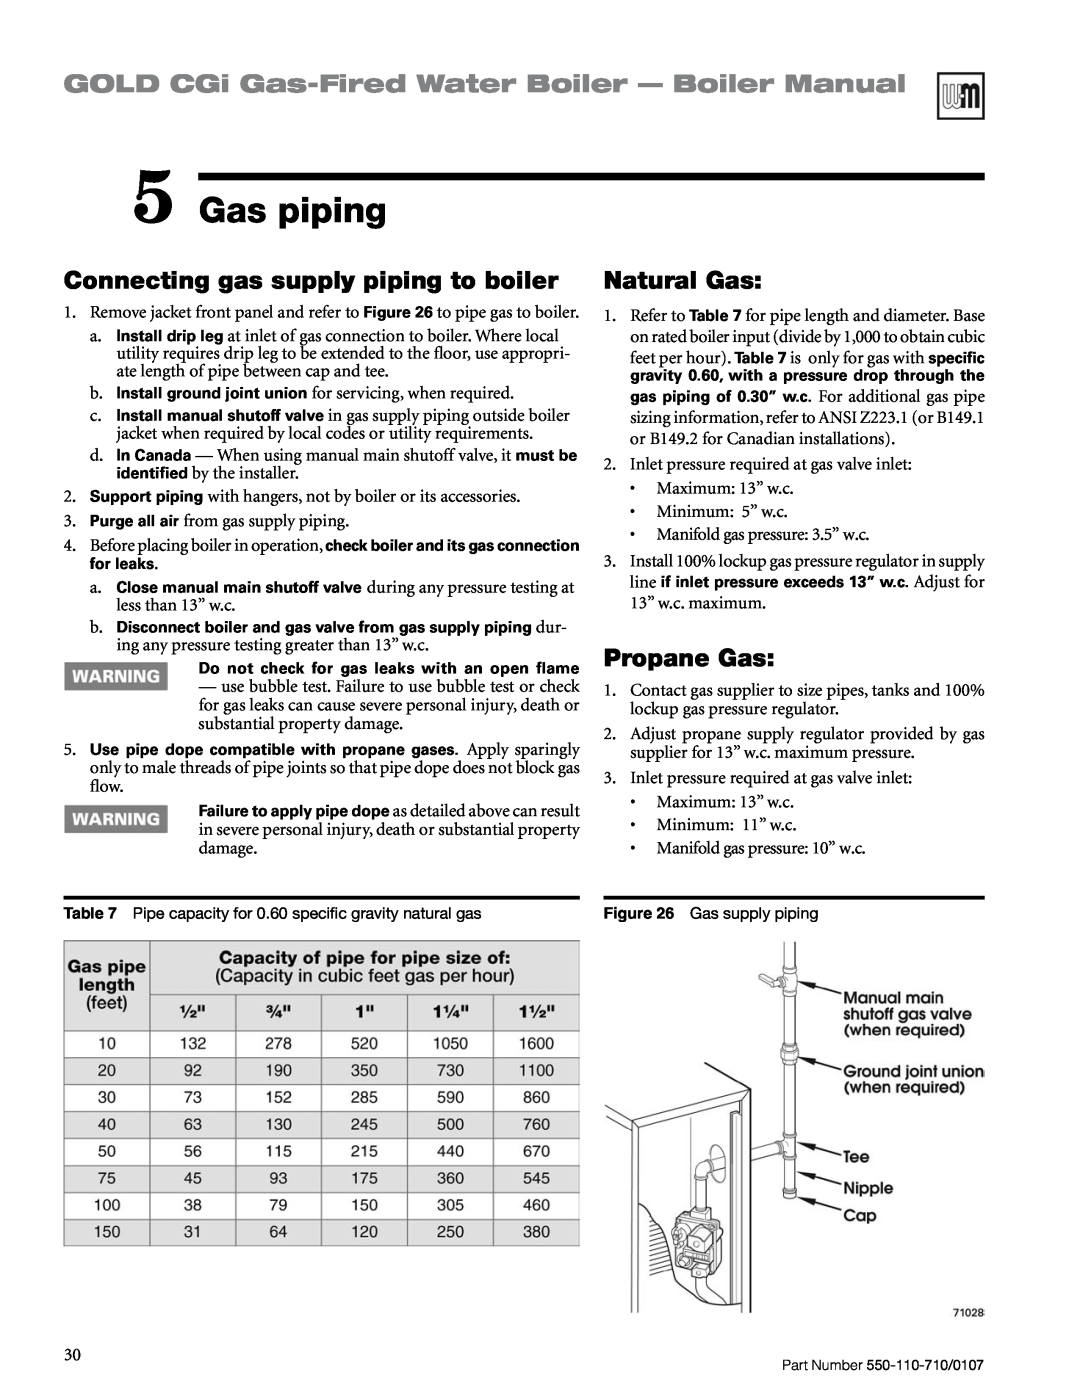 Weil-McLain 550-110-710/0107 manual Gas piping, GOLD CGi Gas-FiredWater Boiler - Boiler Manual, Natural Gas, Propane Gas 